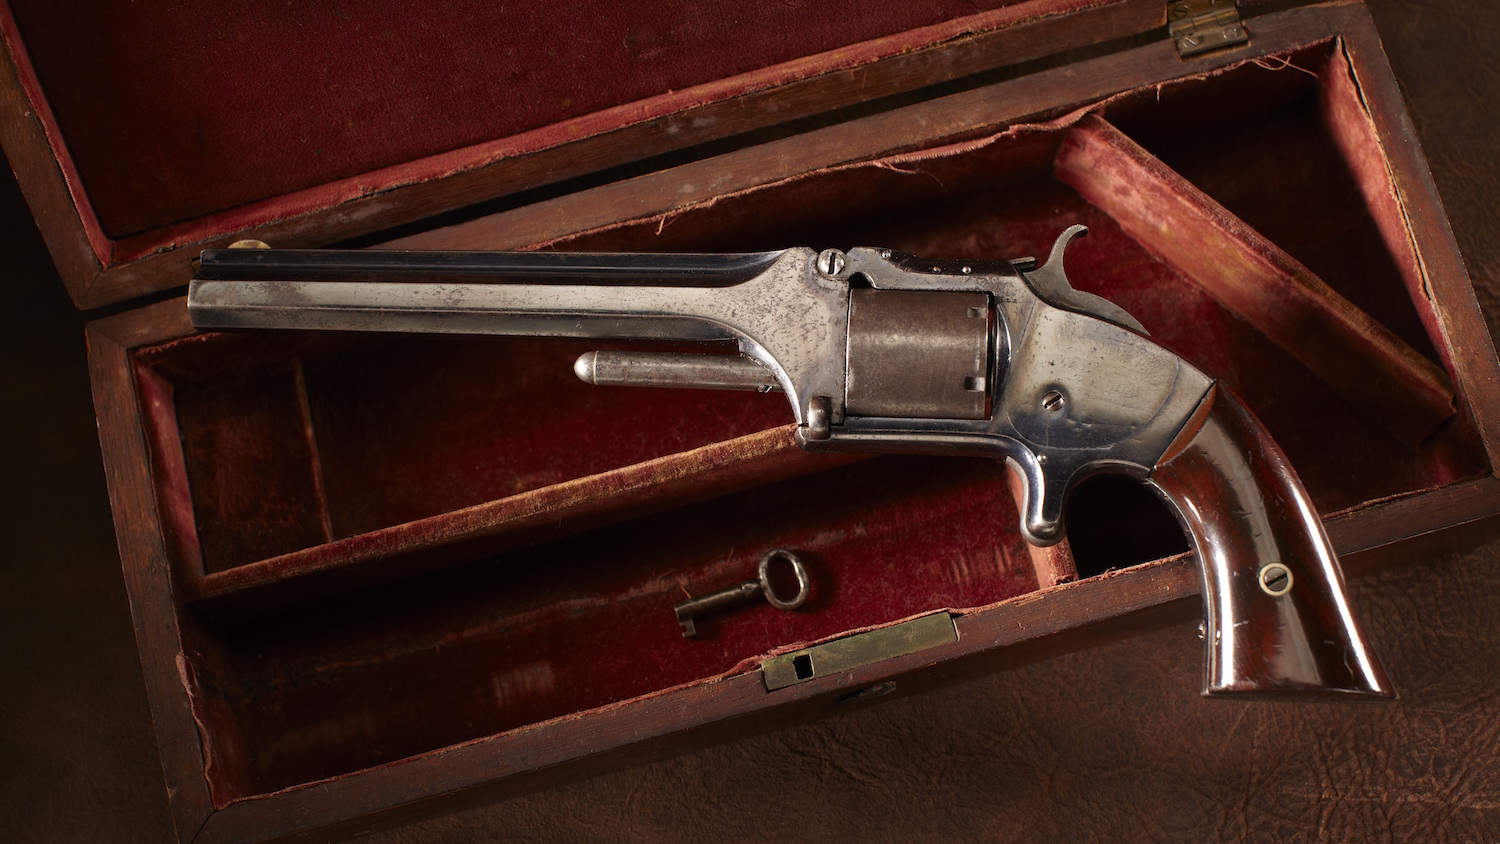 History in a Handgun: William Tecumseh Sherman’s Smith & Wesson No. 2